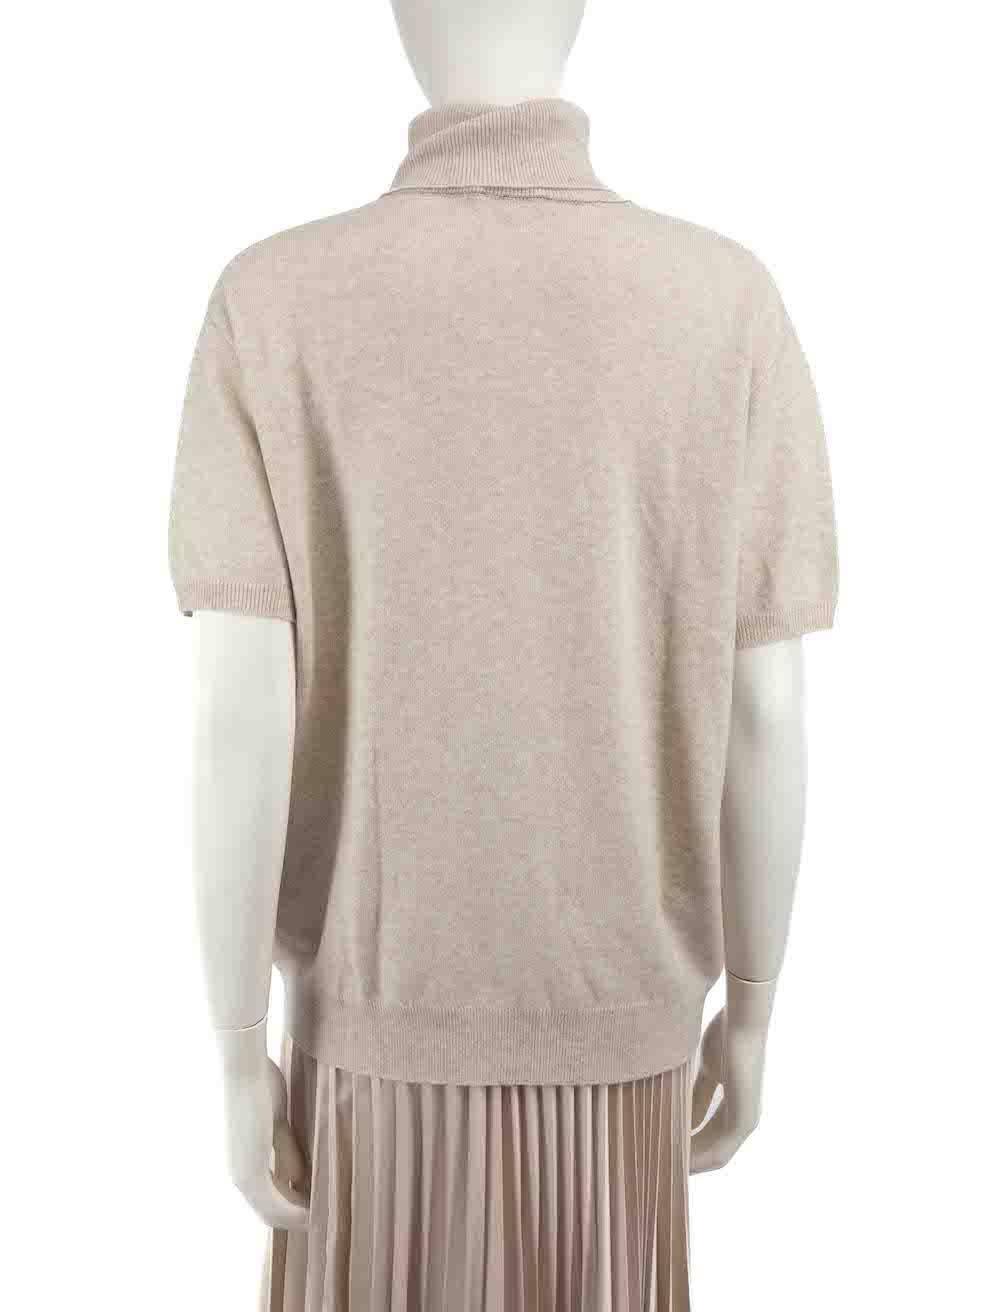 Brunello Cucinelli Ecru Cashmere Turtleneck Knit Top Size M In Good Condition For Sale In London, GB